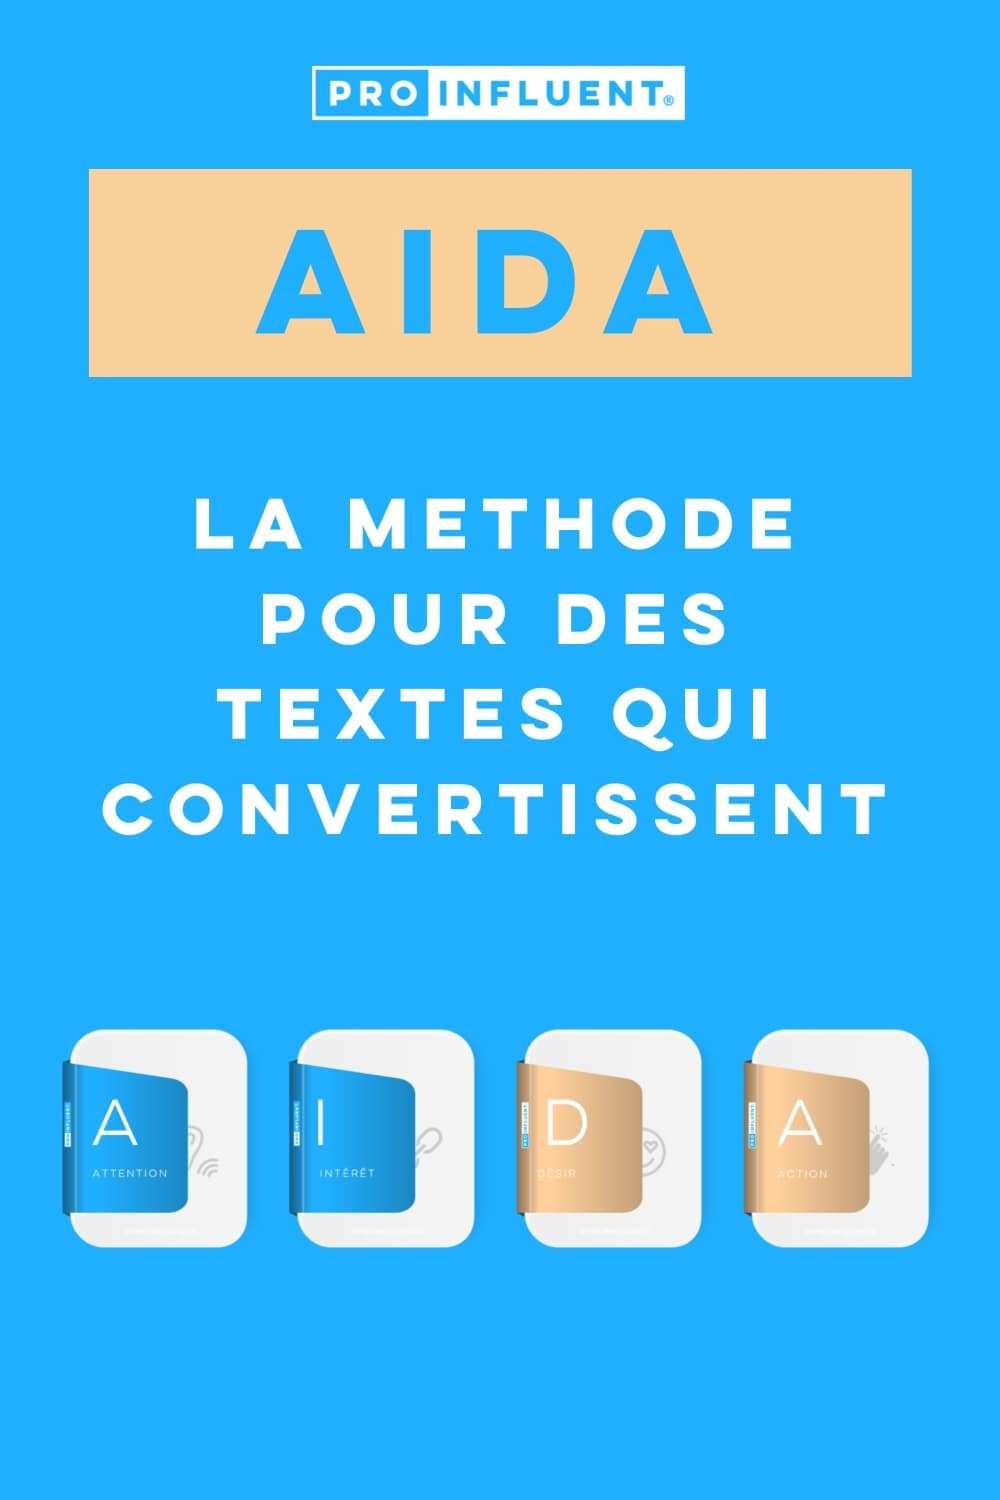 AIDA method: to write texts that convert